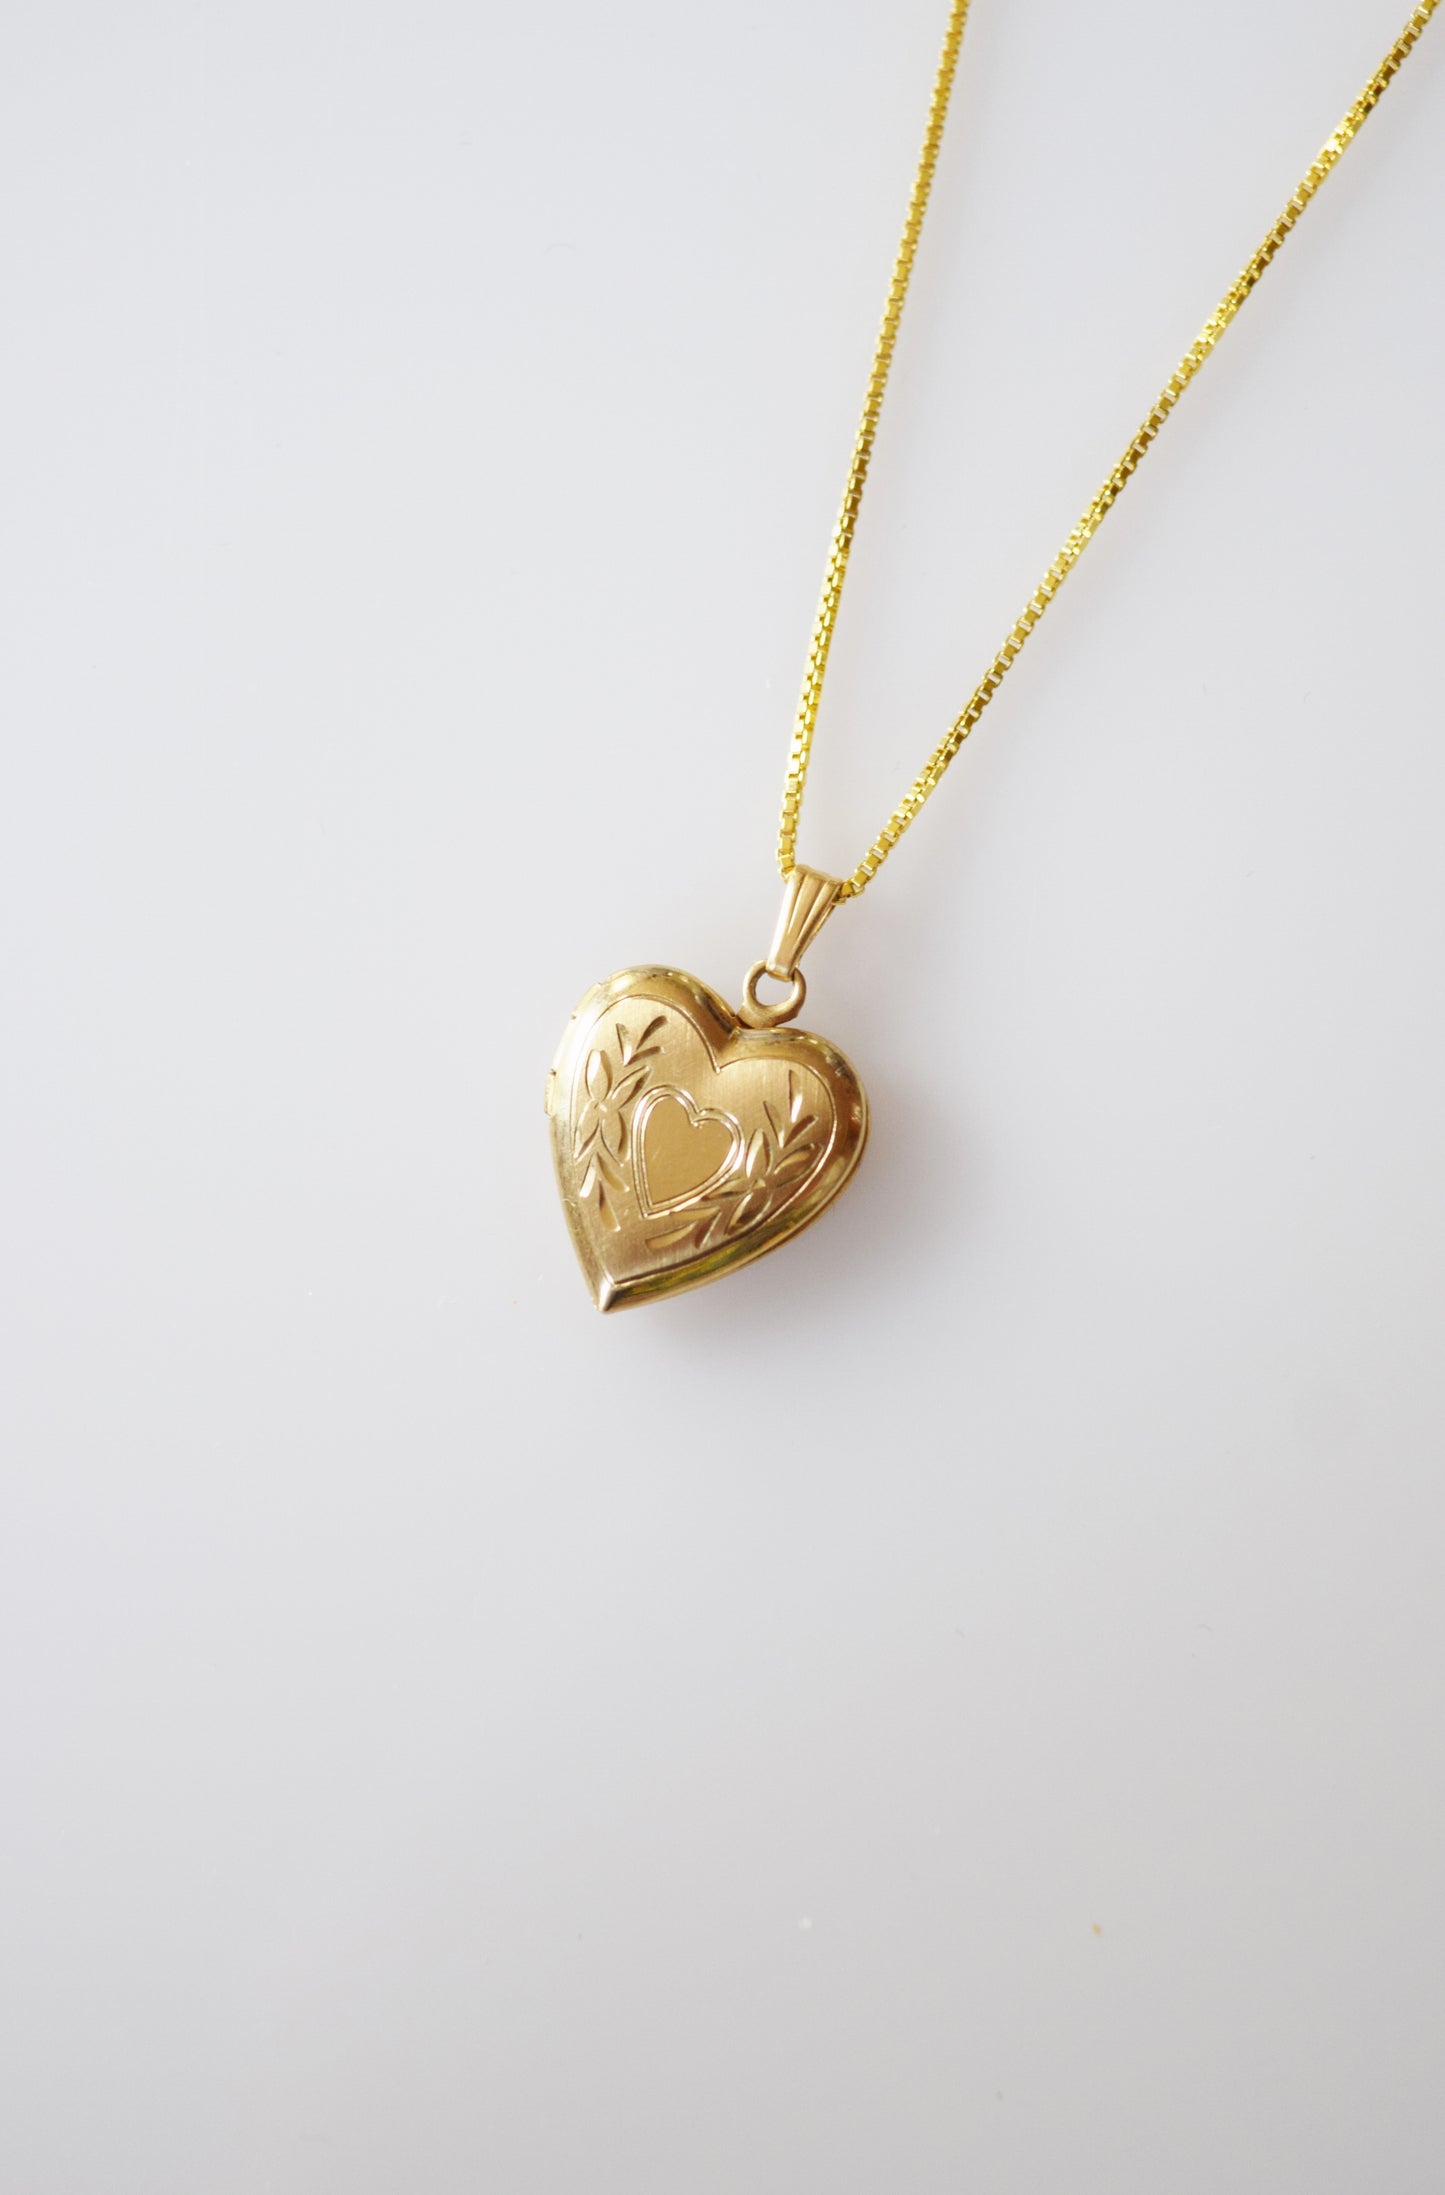 Petite Vintage Heart Shaped Locket | Heart Center